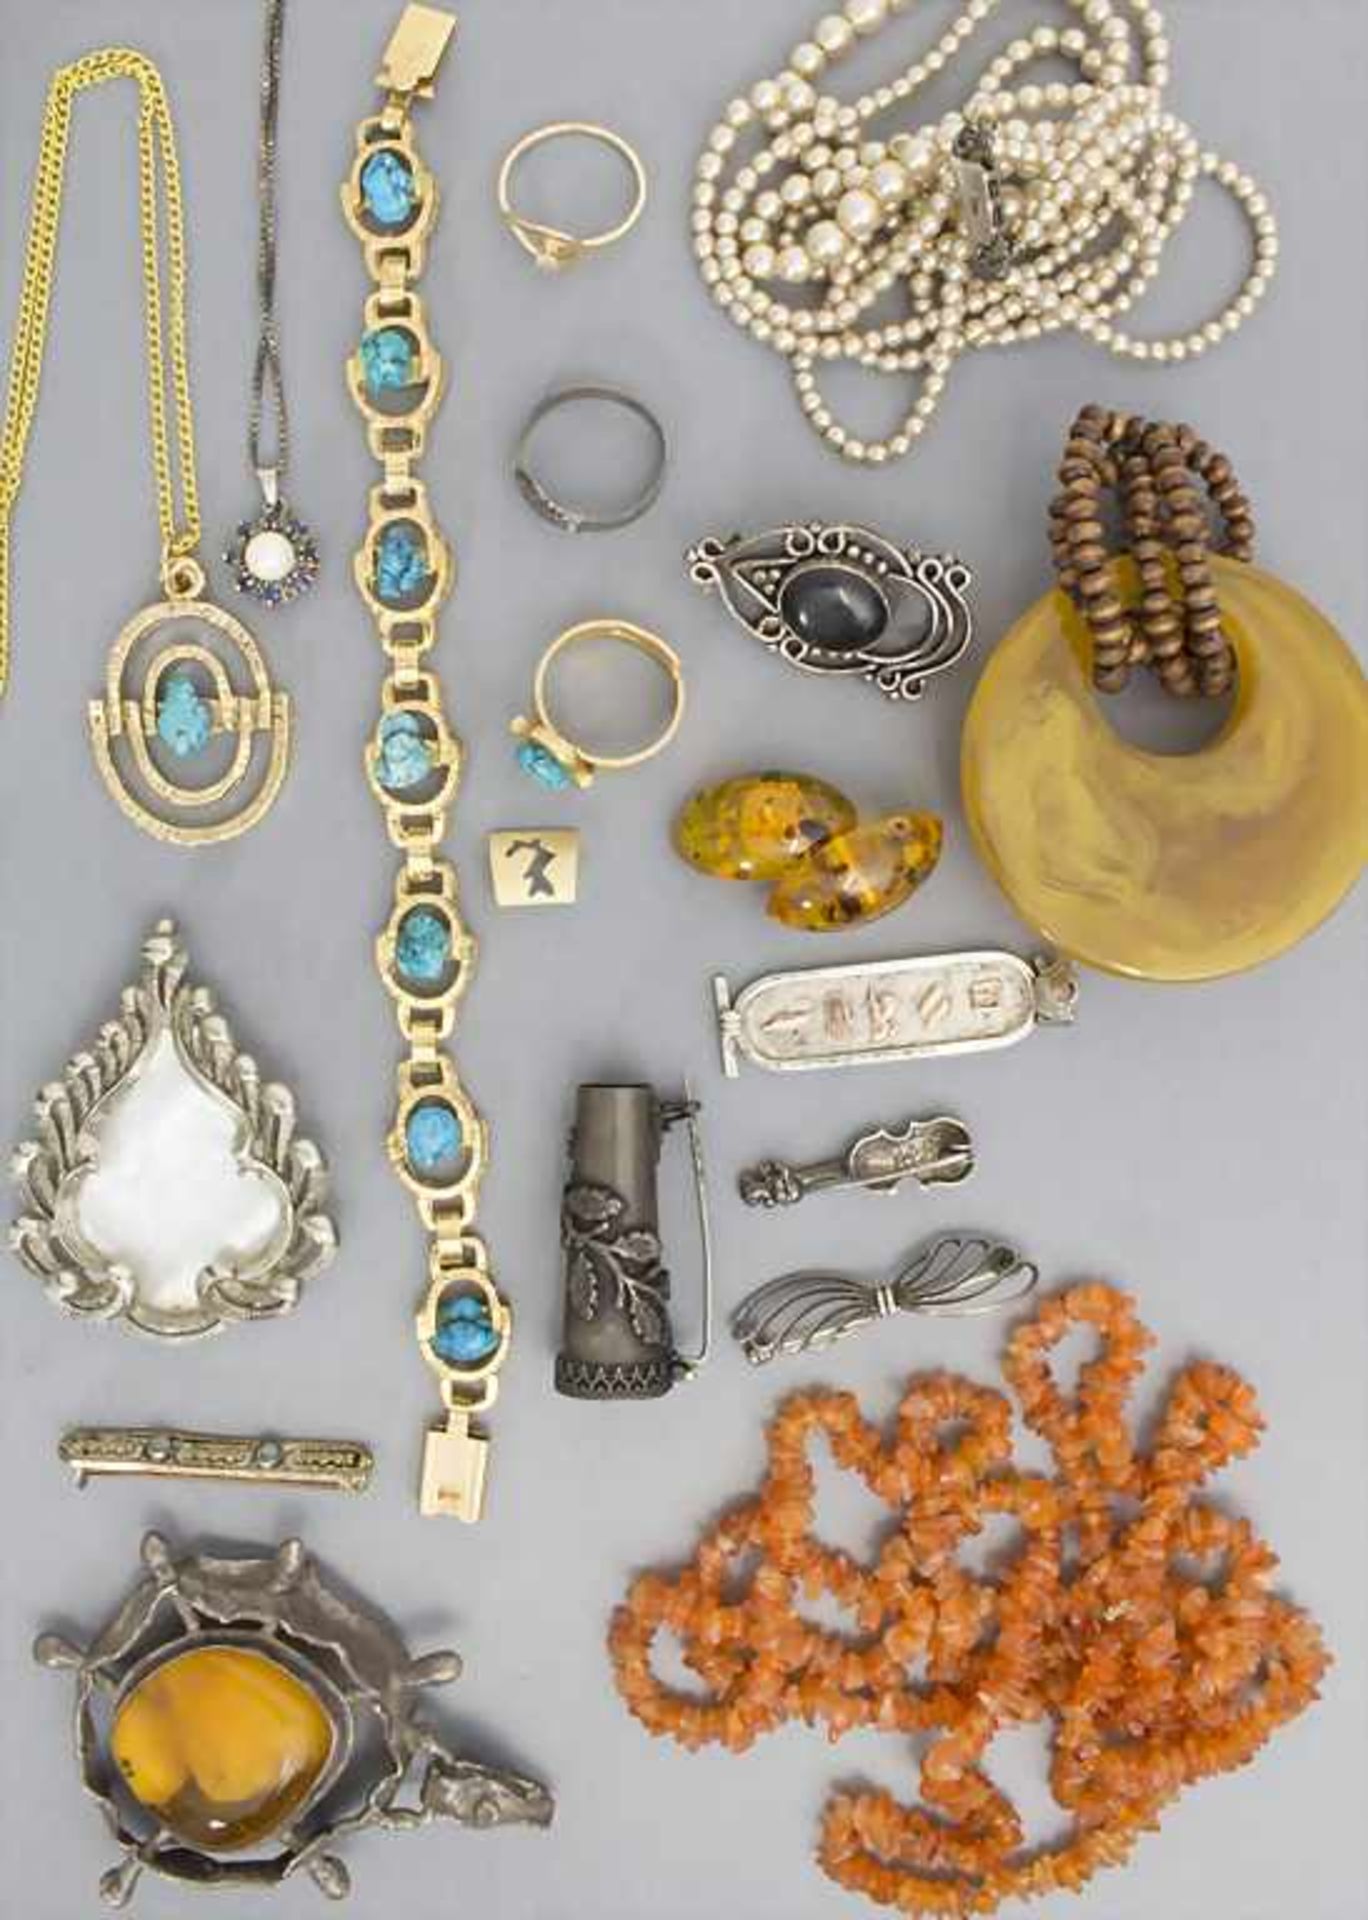 Konvolut Schmuck / A set of jewelleryBestehend aus: 3 Ringe, 4 Ketten, 5 Anhänger, 1 Armband, 4